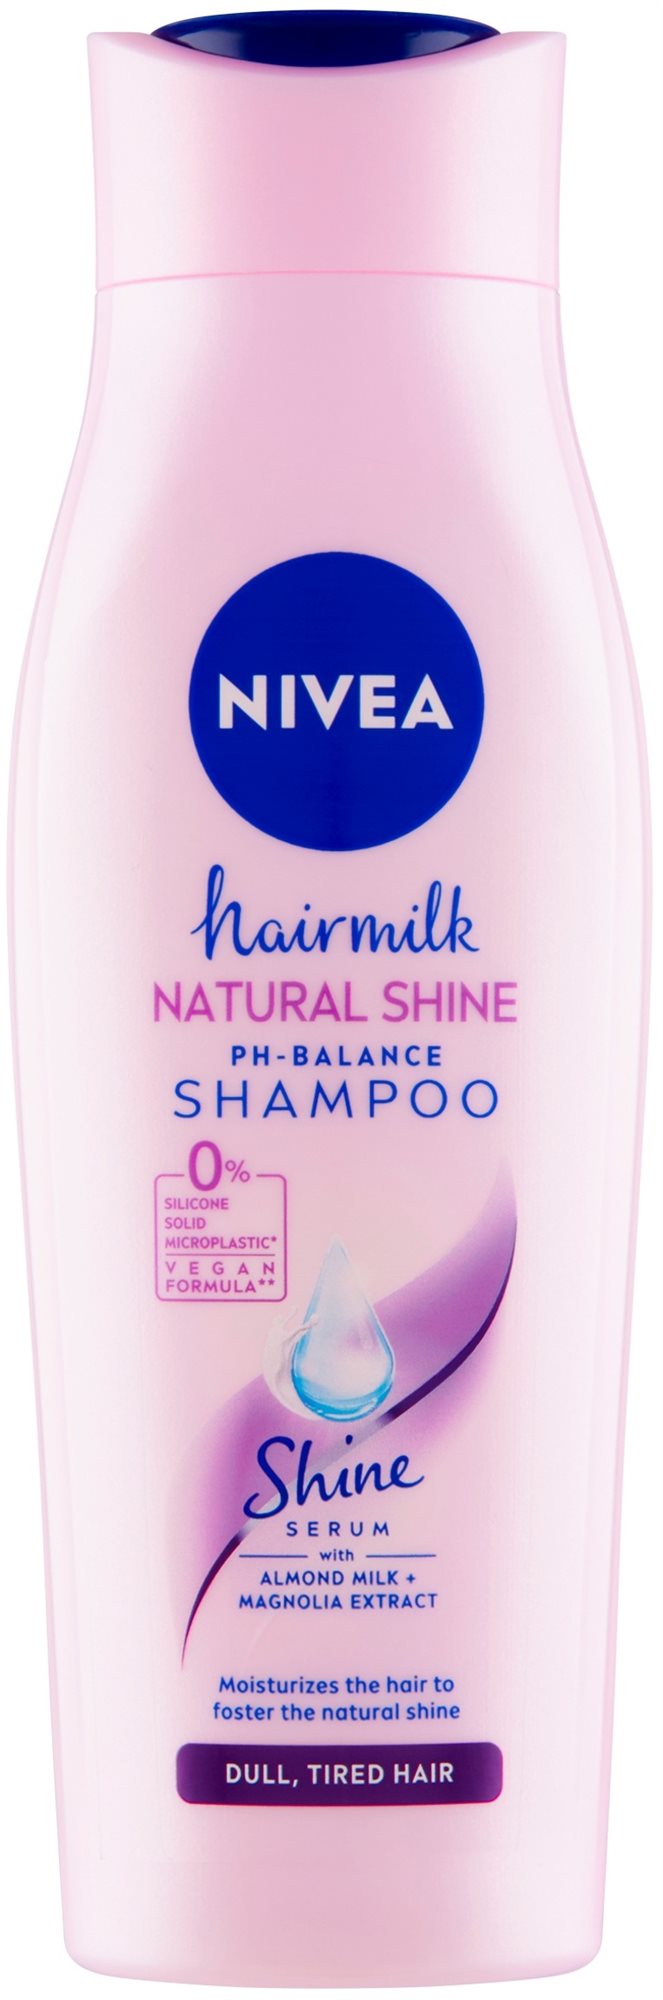 NIVEA Hairmilk Natural Shine 250 ml